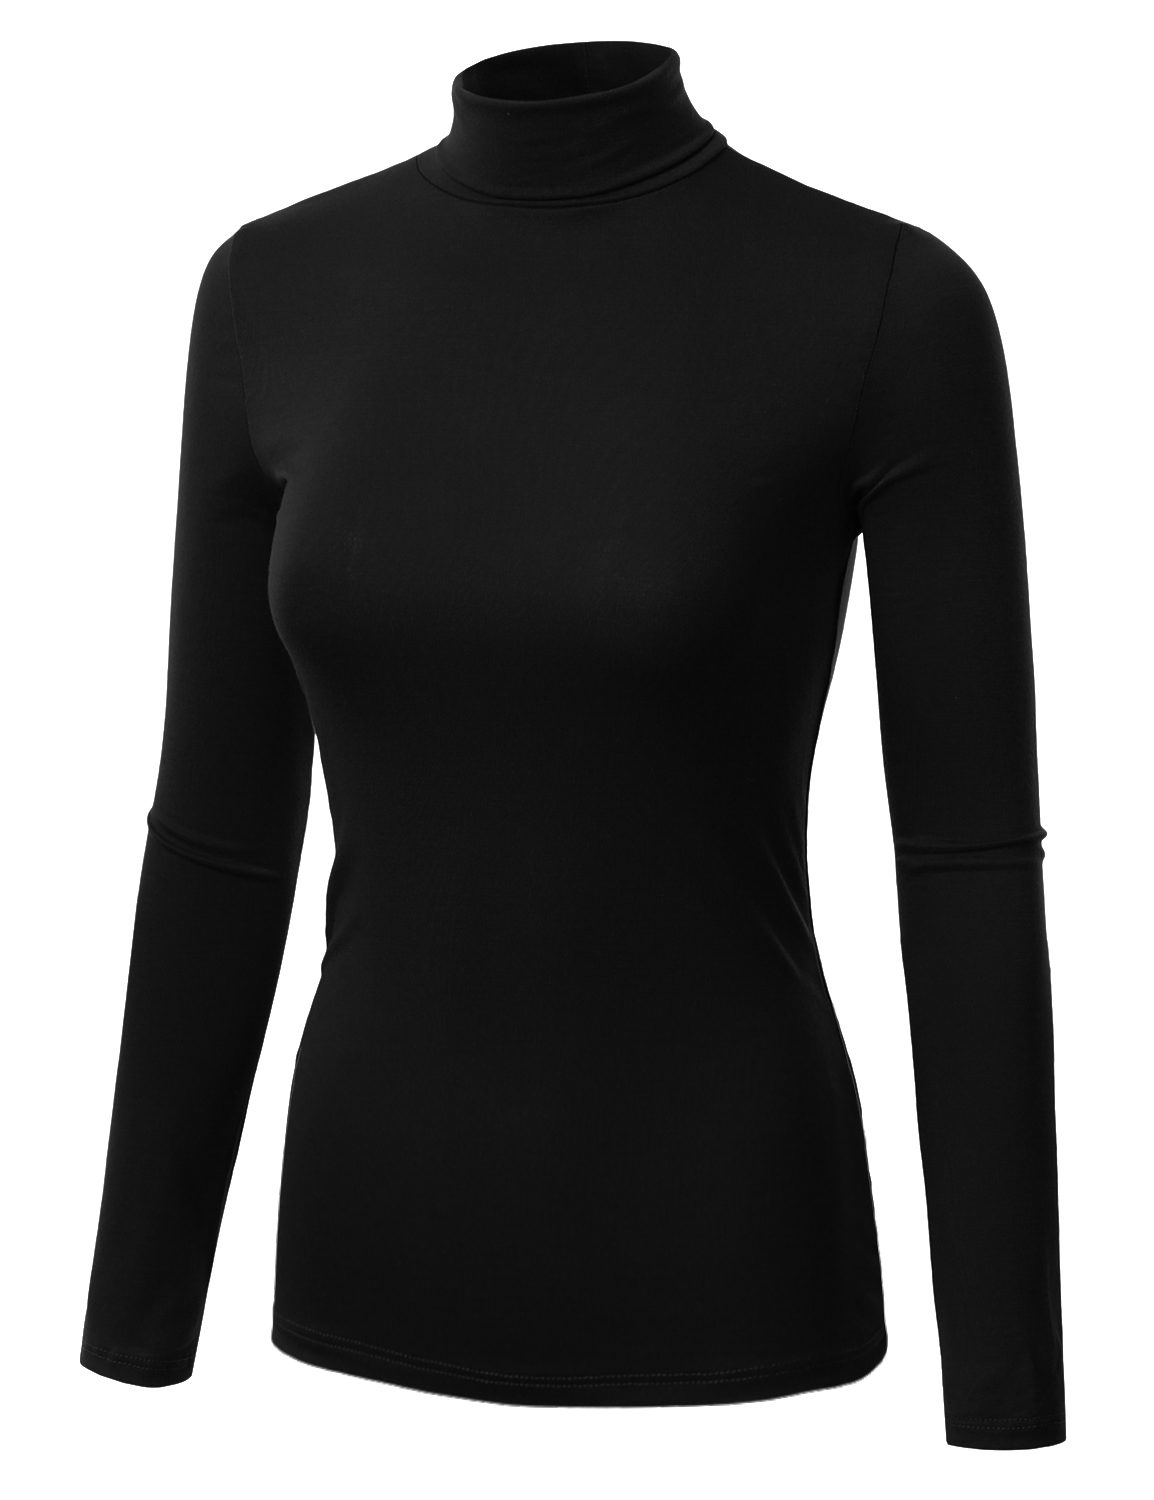 Doublju Womens Long Sleeve Turtleneck Lightweight Pullover Top Sweater ...